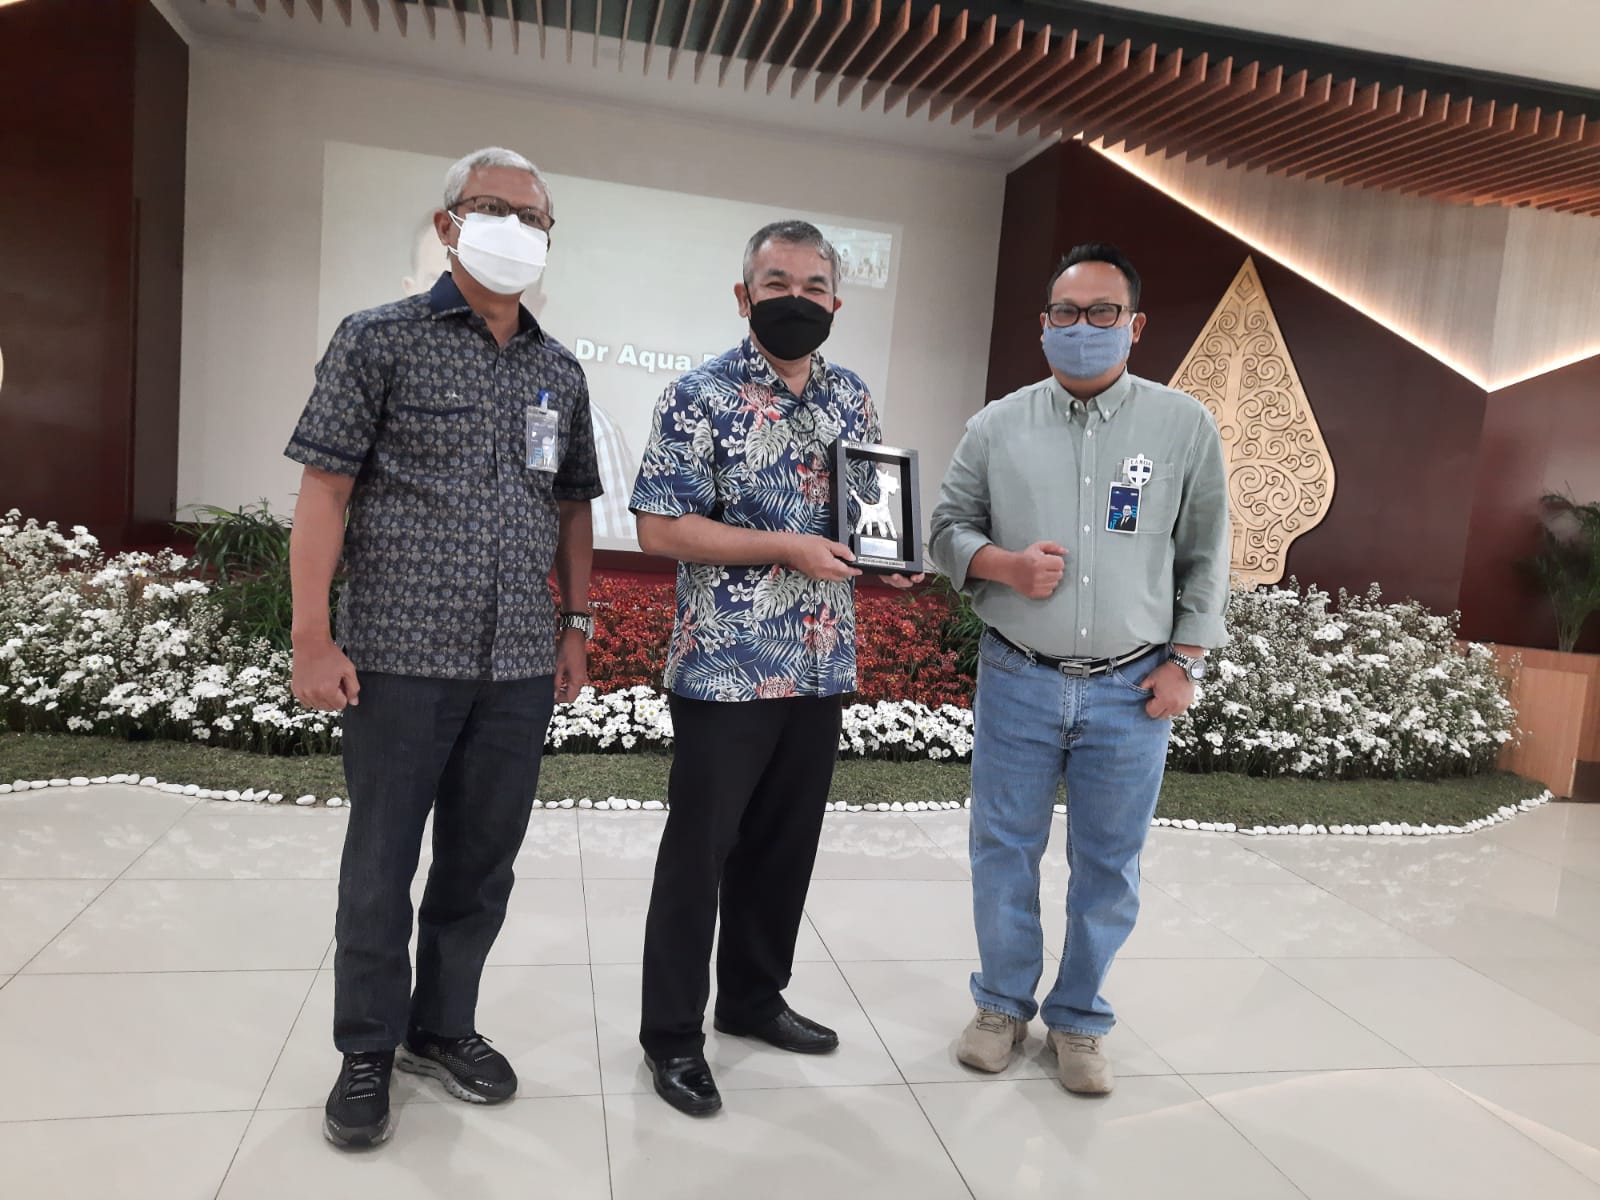 Pakar Komunikasi dan Motivator Nasional Dr Aqua Dwipayana (tengah) bersama Pimpinan Wilayah BRI Semarang Wahyu Sulistiyono (kanan) dan Kepala Audit Intern BRI Wilayah Semarang Kaspiyah (kiri)/tugu jatim